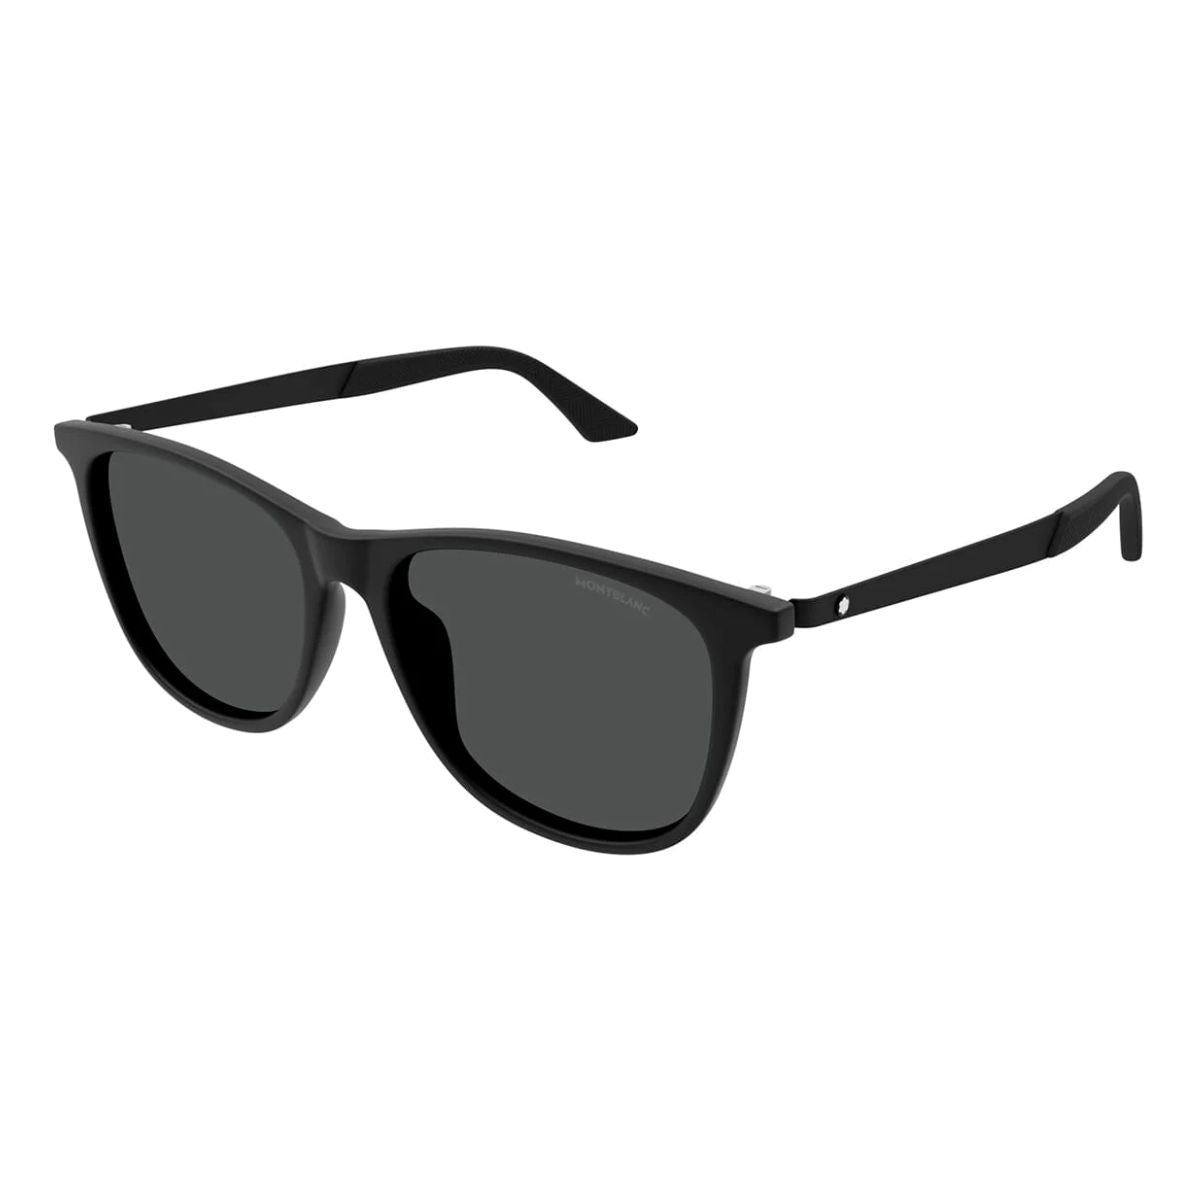 "Buy Stylish Montblanc Black Square Sunglasses For Mens At Optorium"